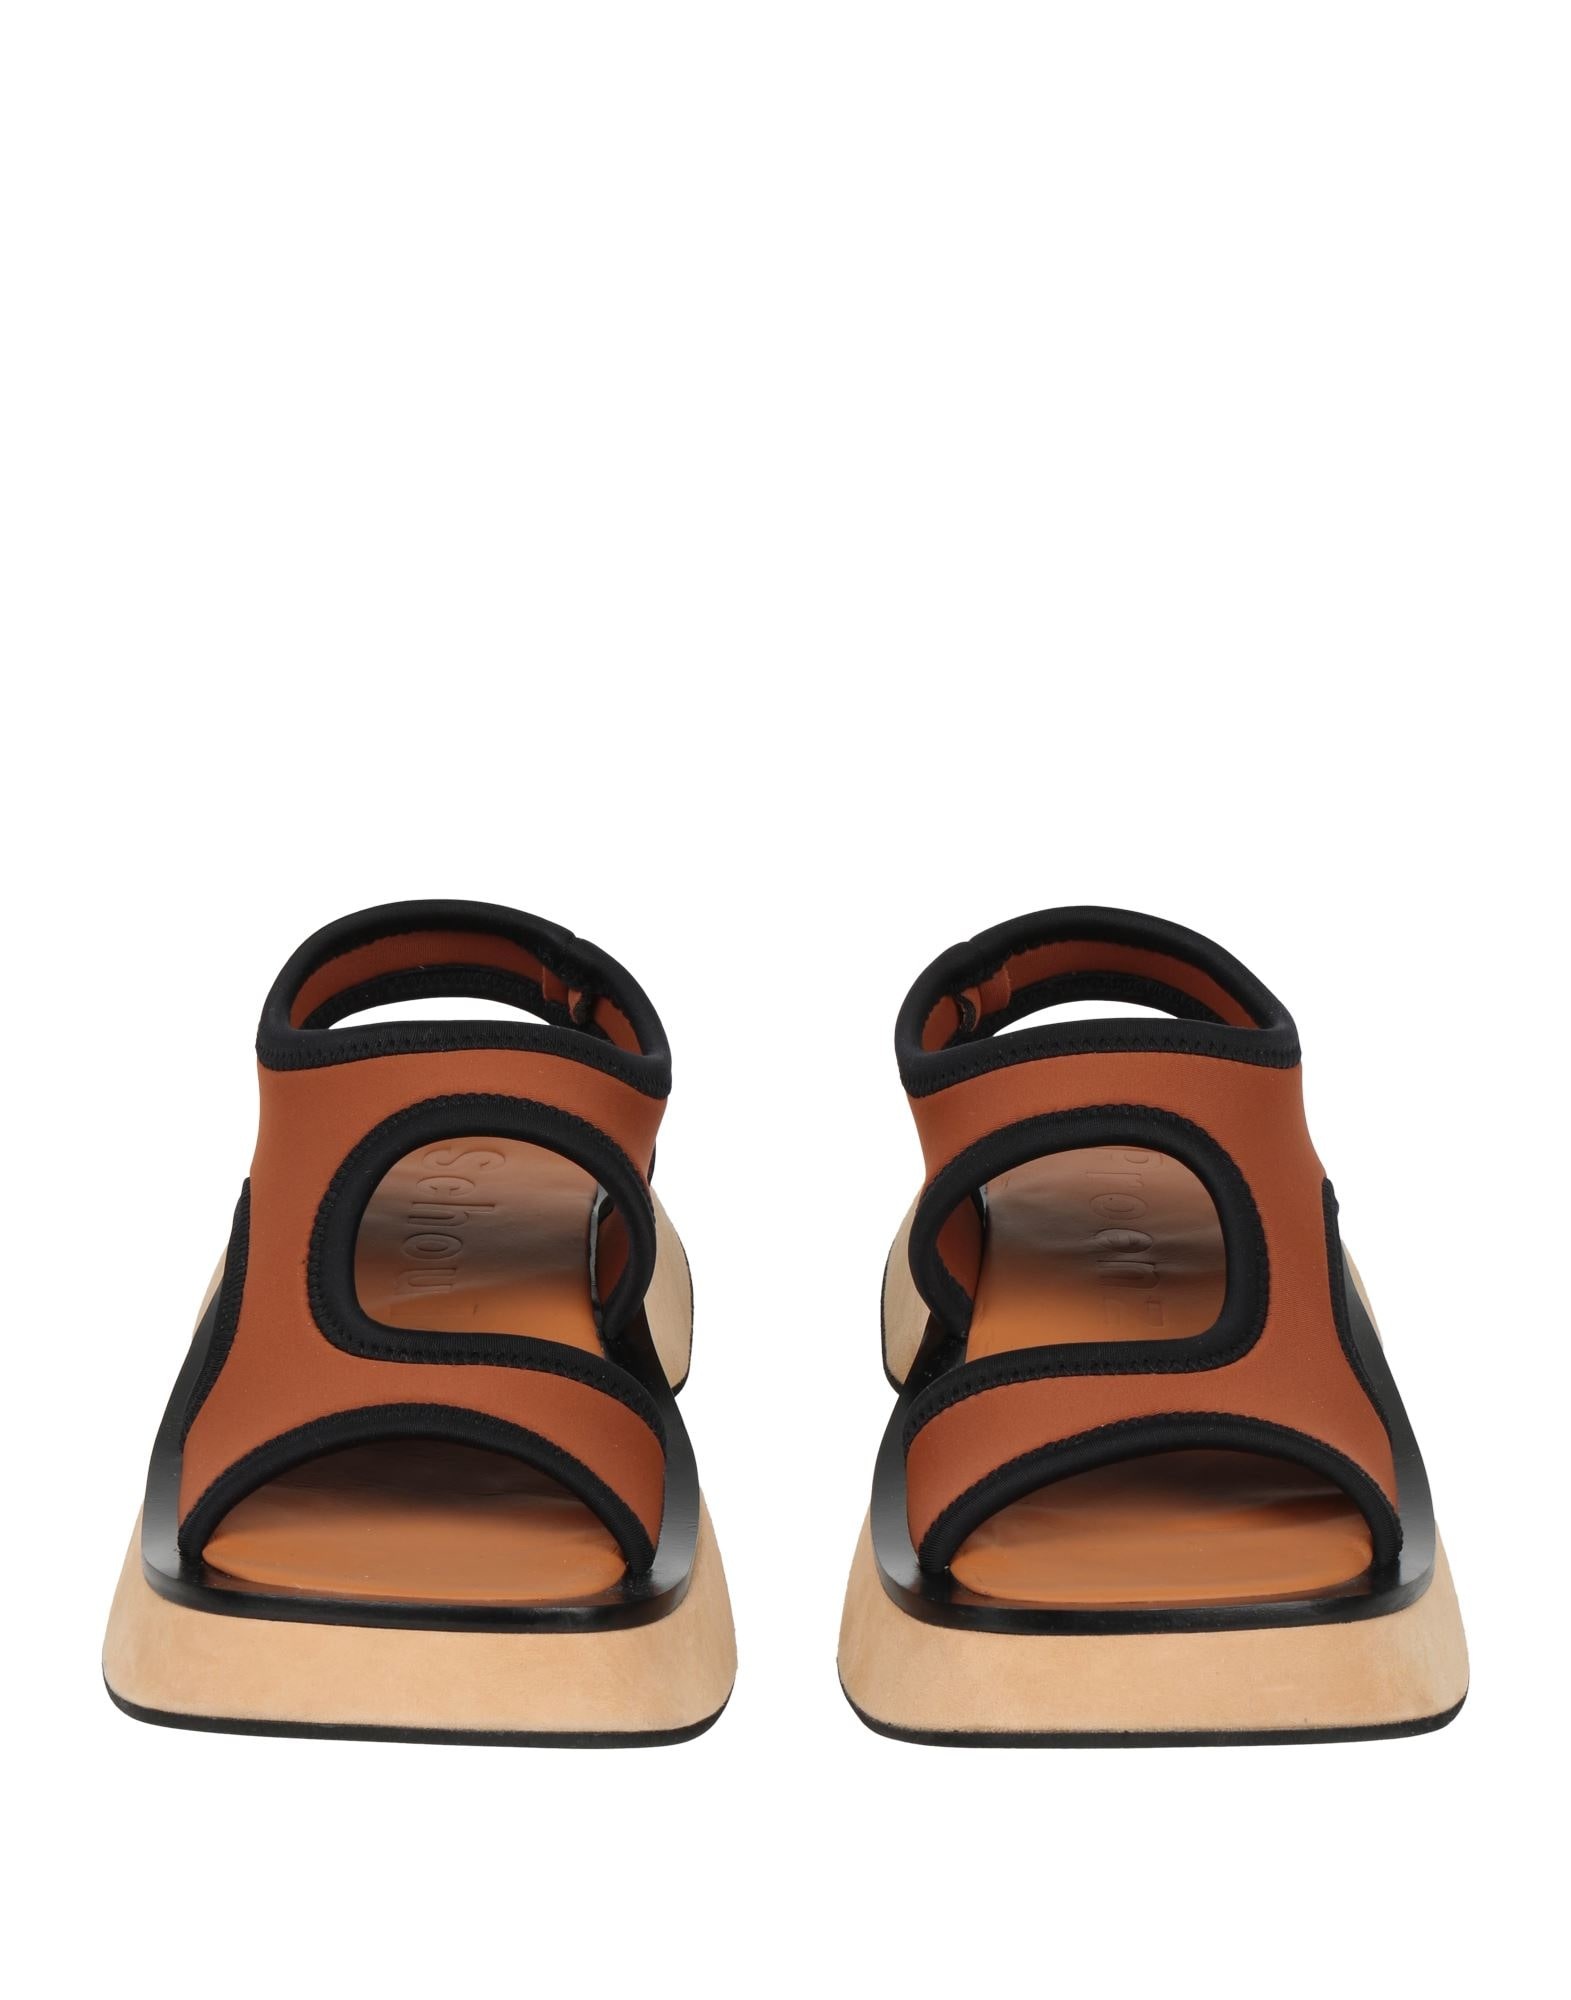 Tan Women's Sandals - 4